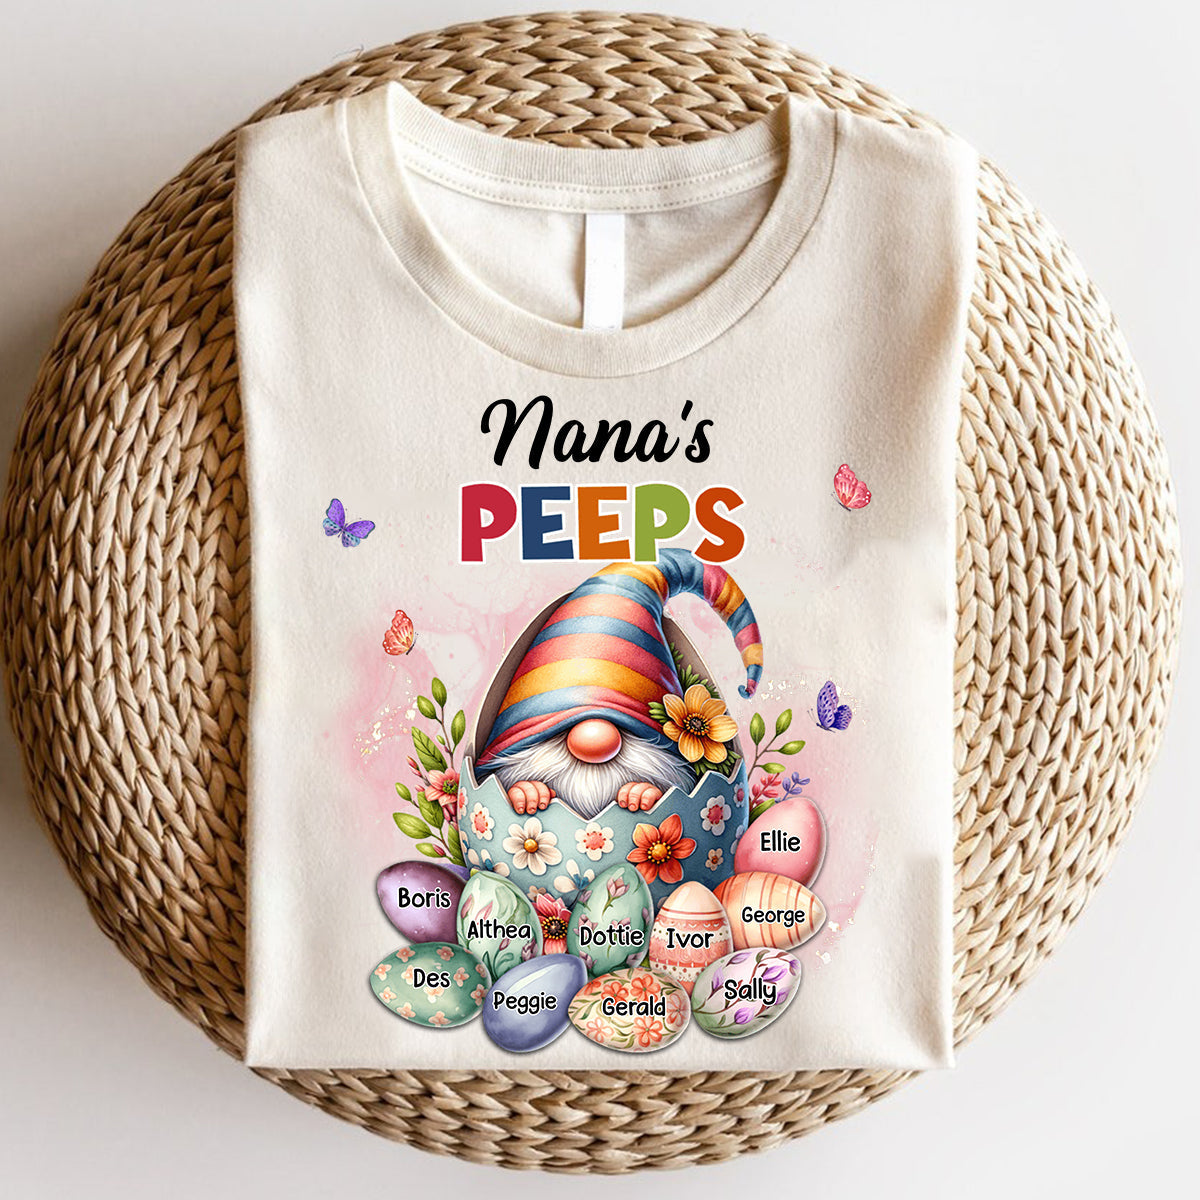 Personalized Easter Grandma Mom's Egg Kids T-shirt